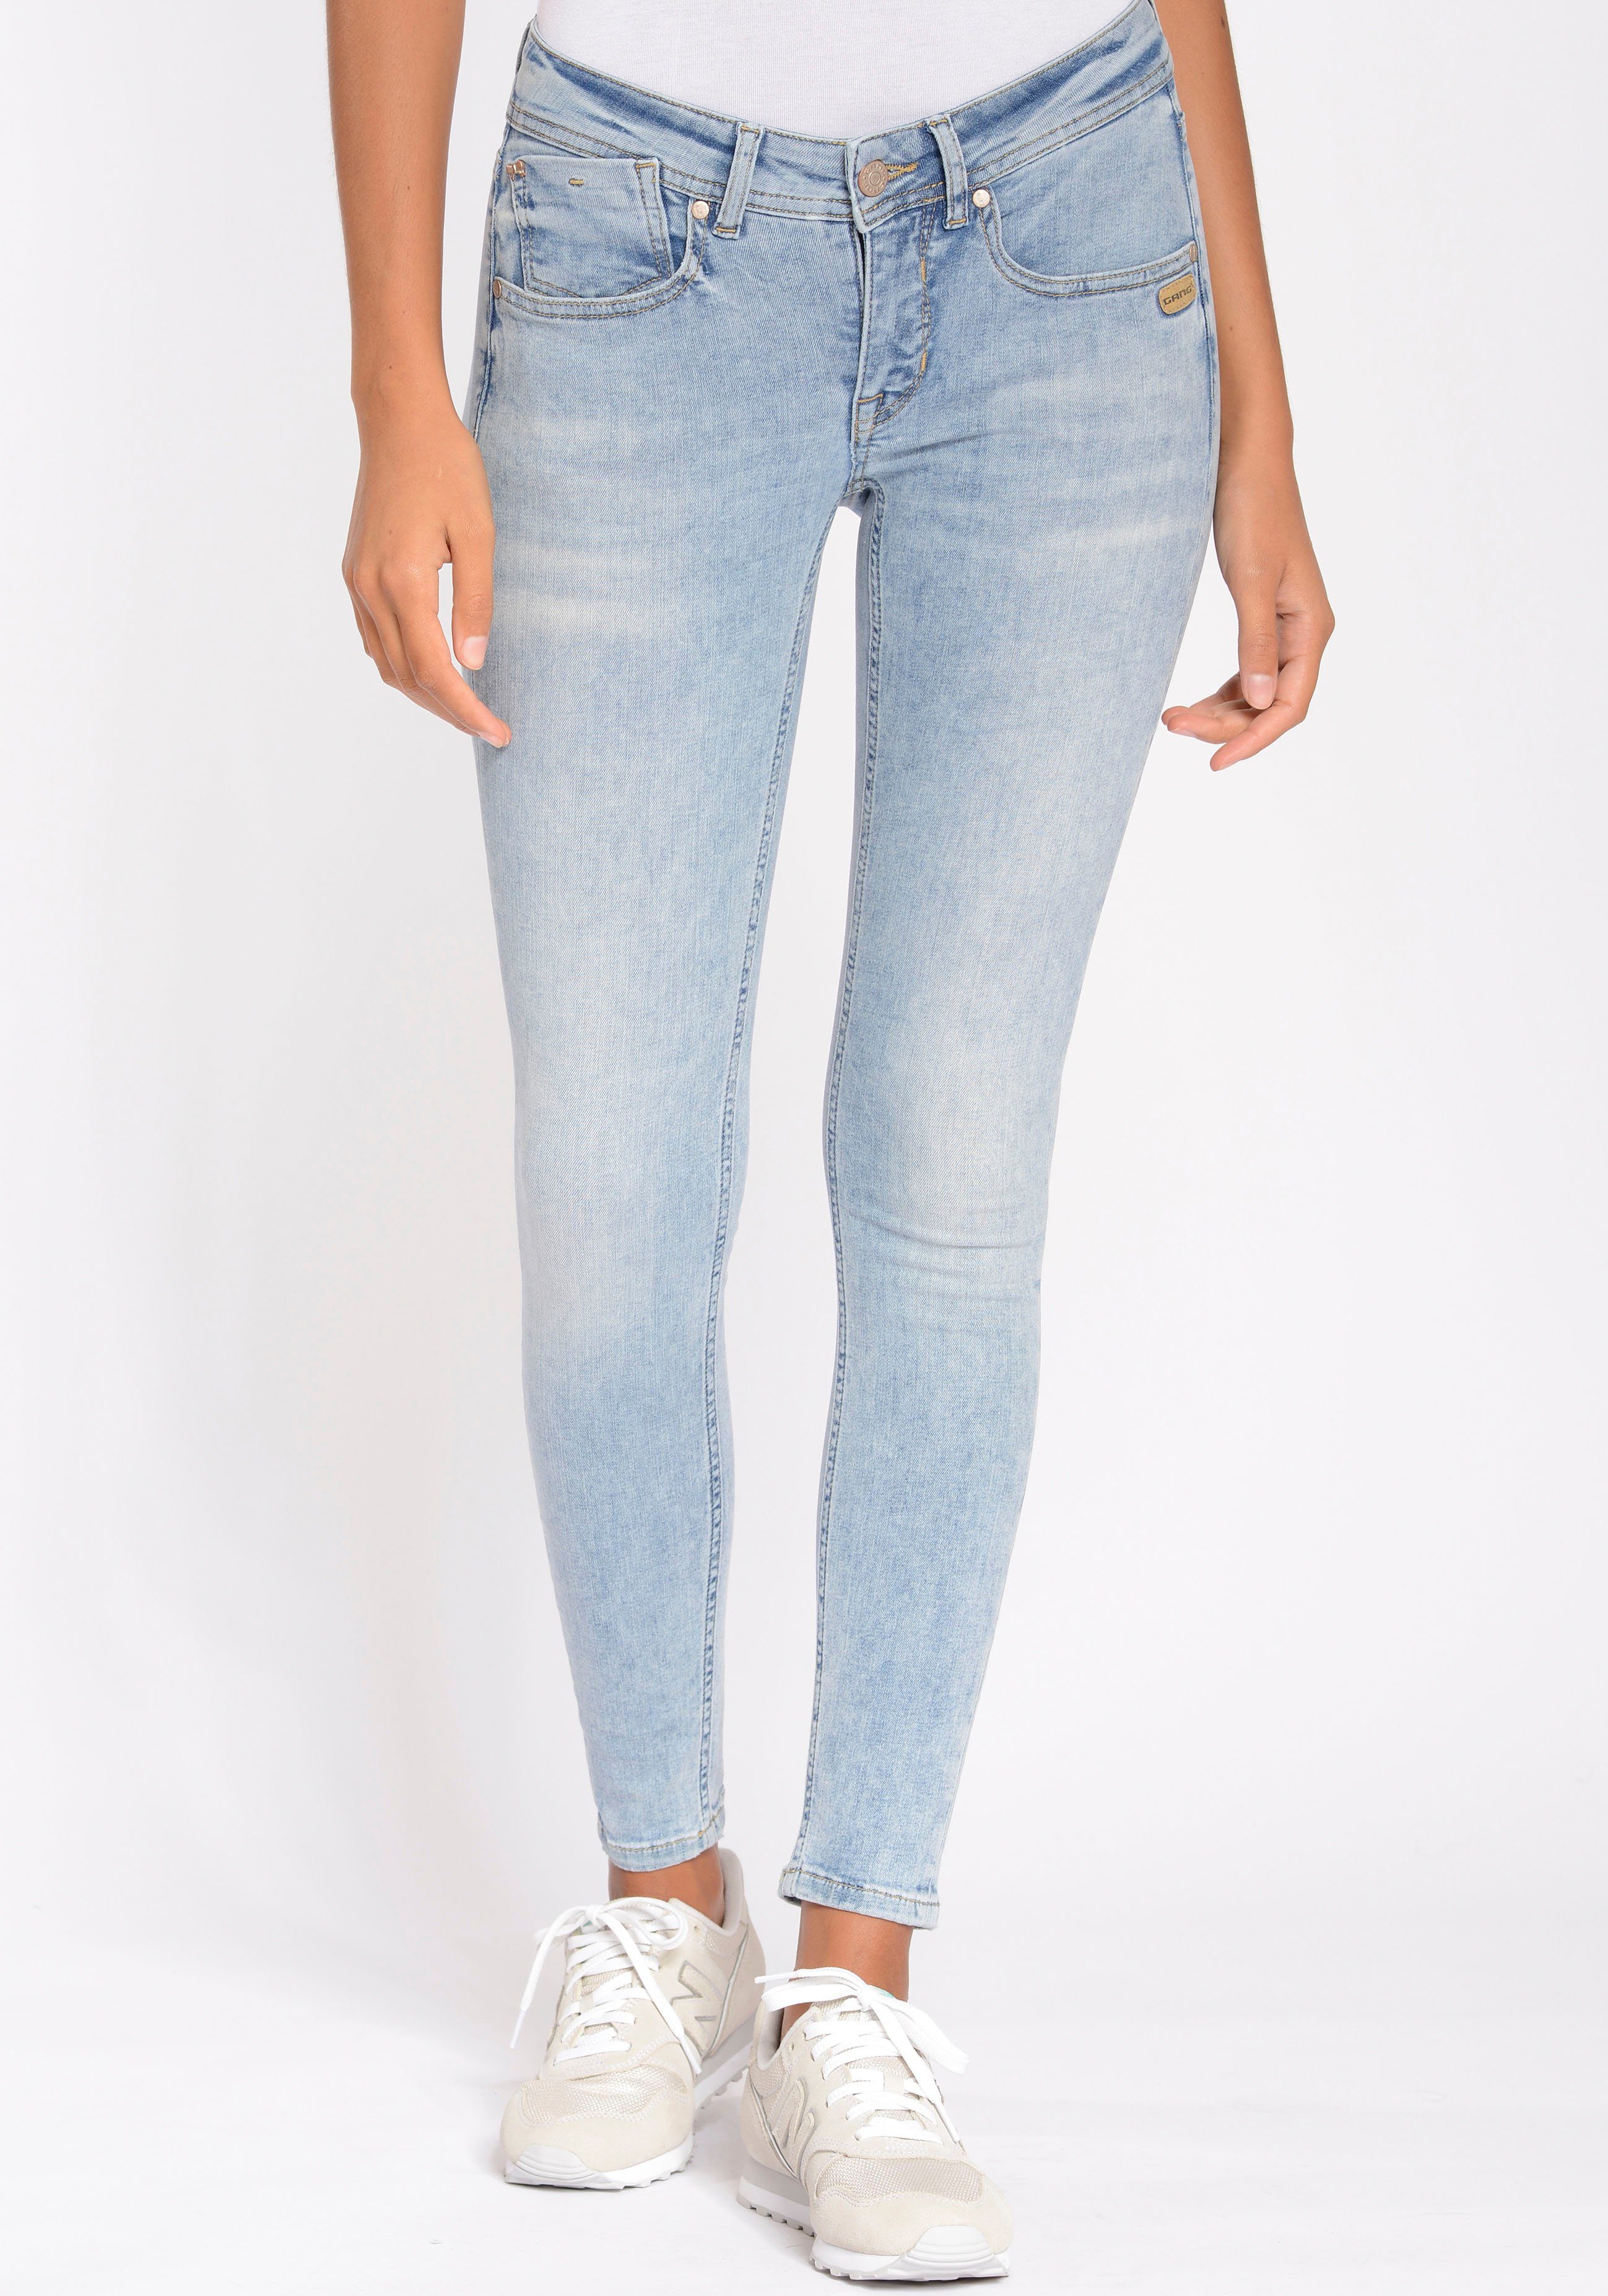 GANG Skinny-fit-Jeans 94FAYE CROPPED mit hoher Elastizität und ultimativem Komfort